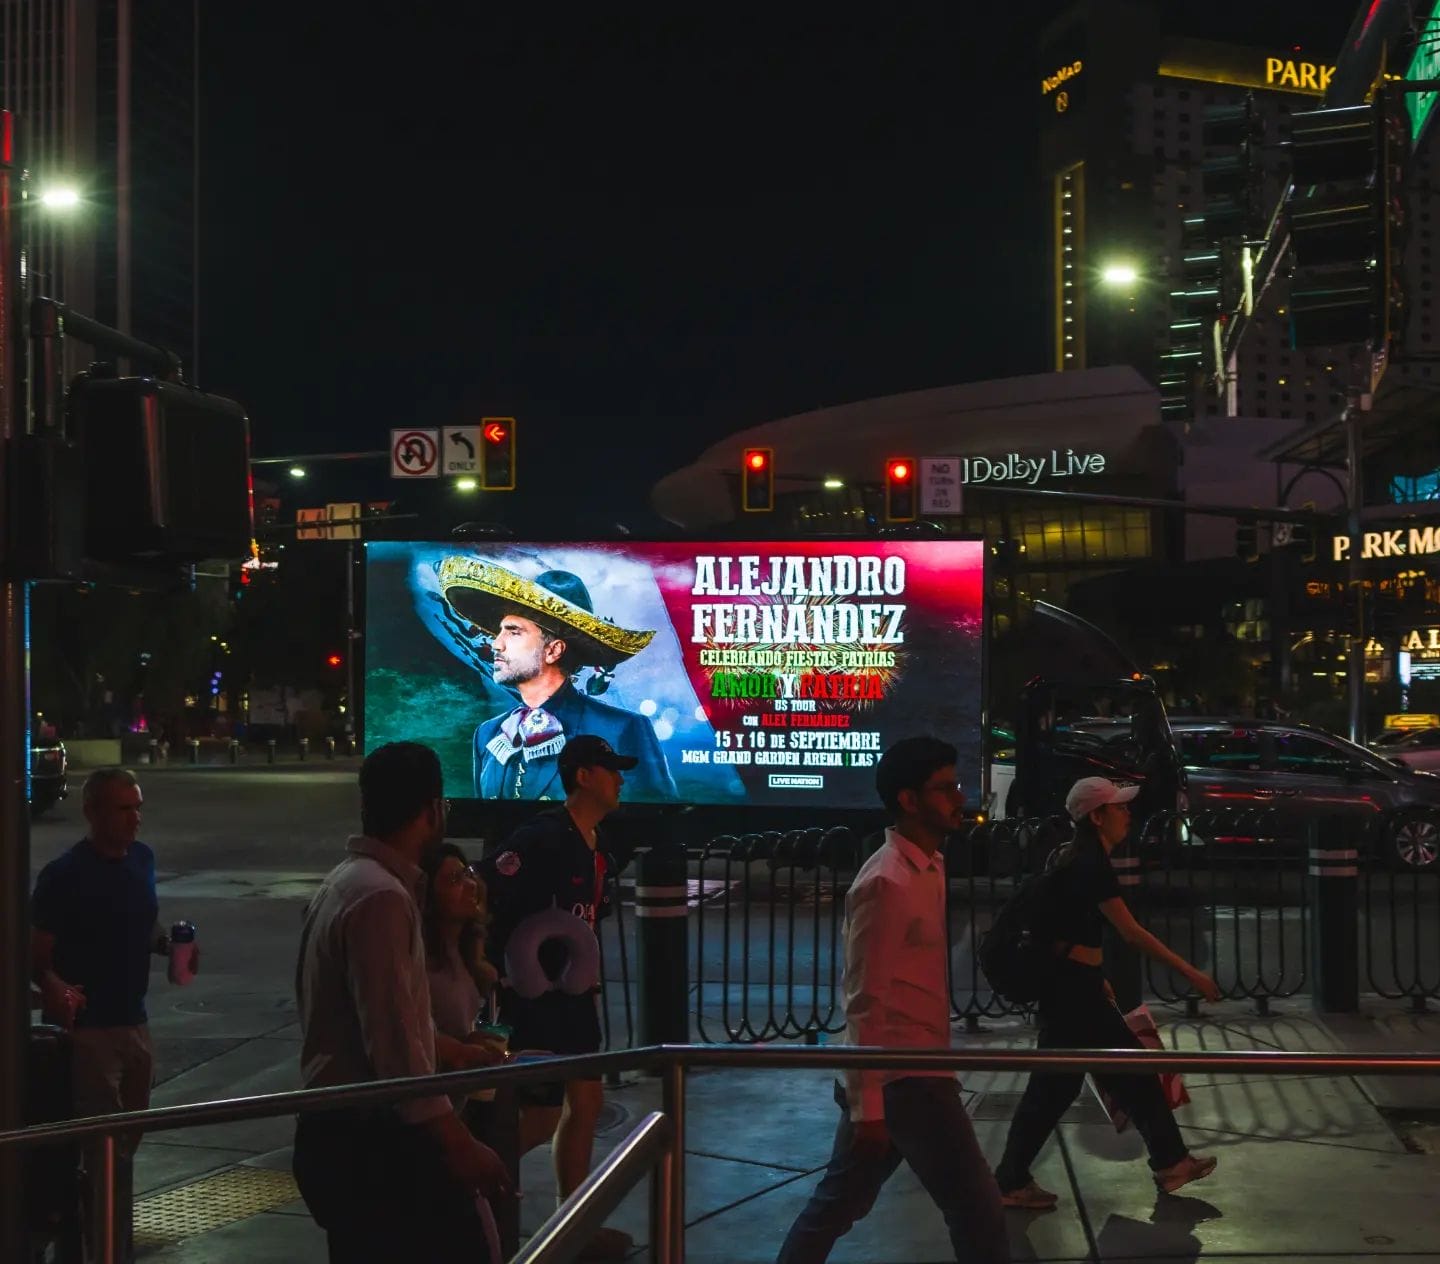 People near illuminated billboard at night in city.